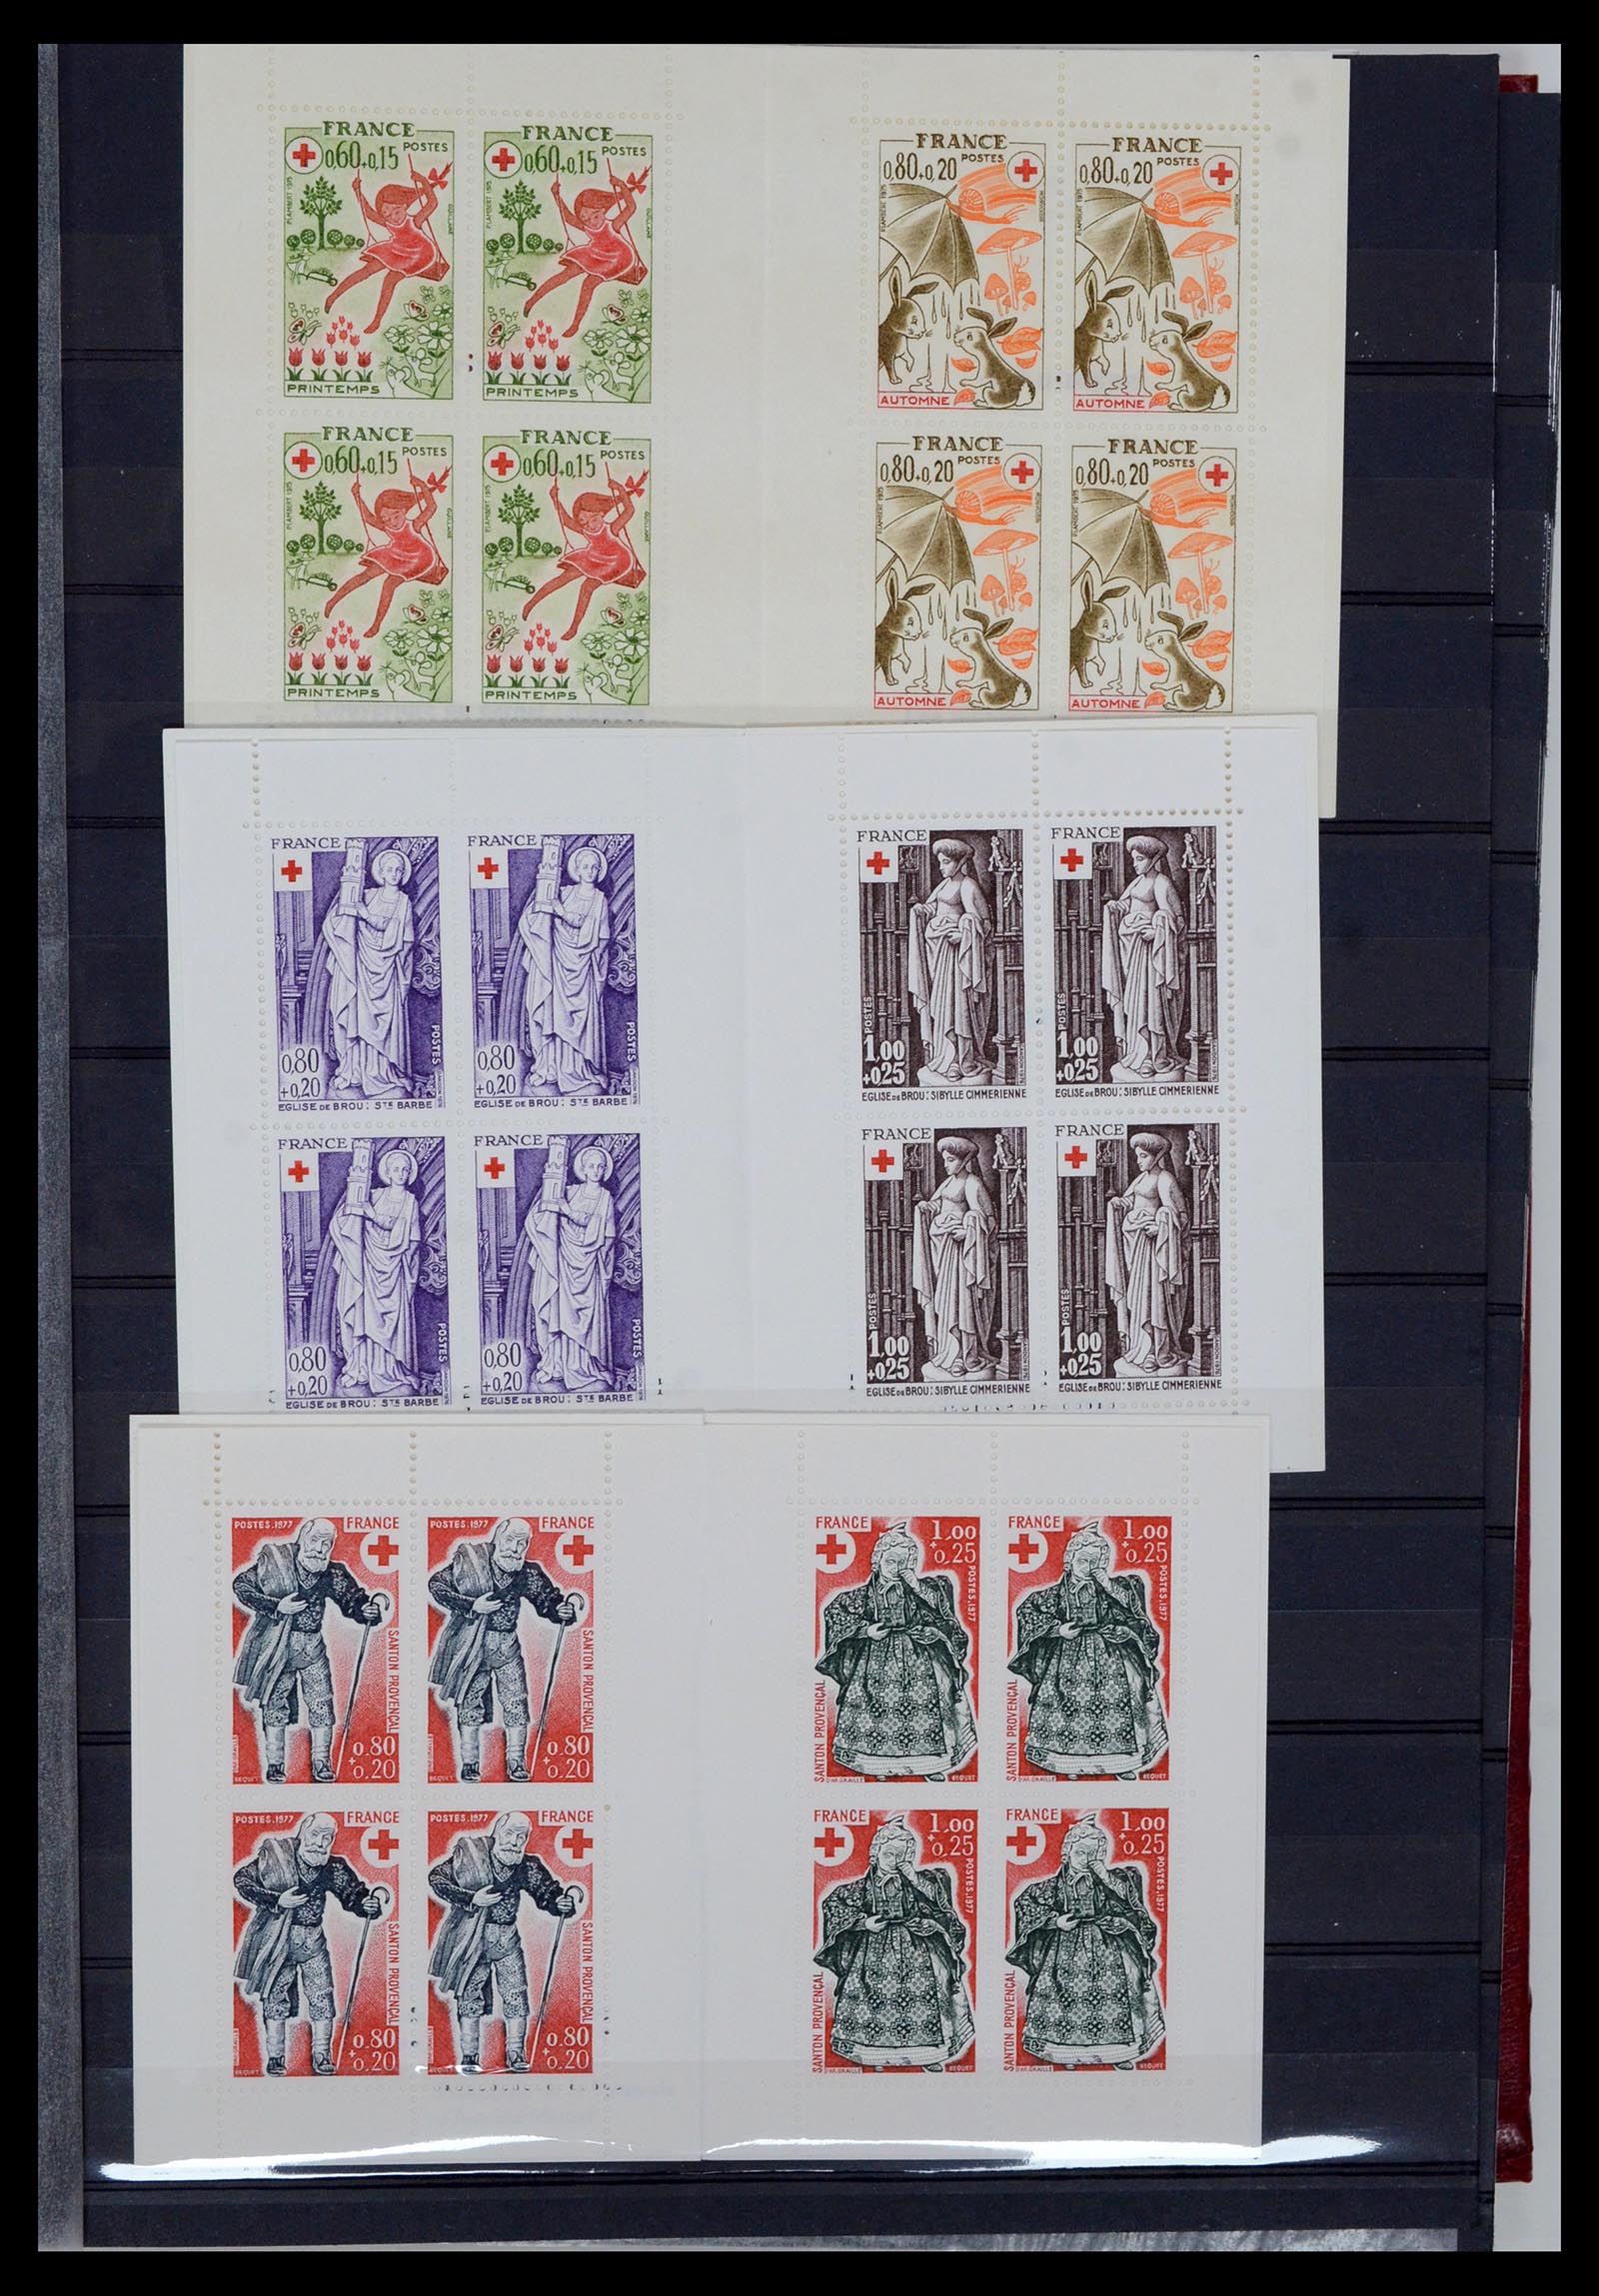 36728 009 - Stamp collection 36728 France stamp booklets 1952-2011.